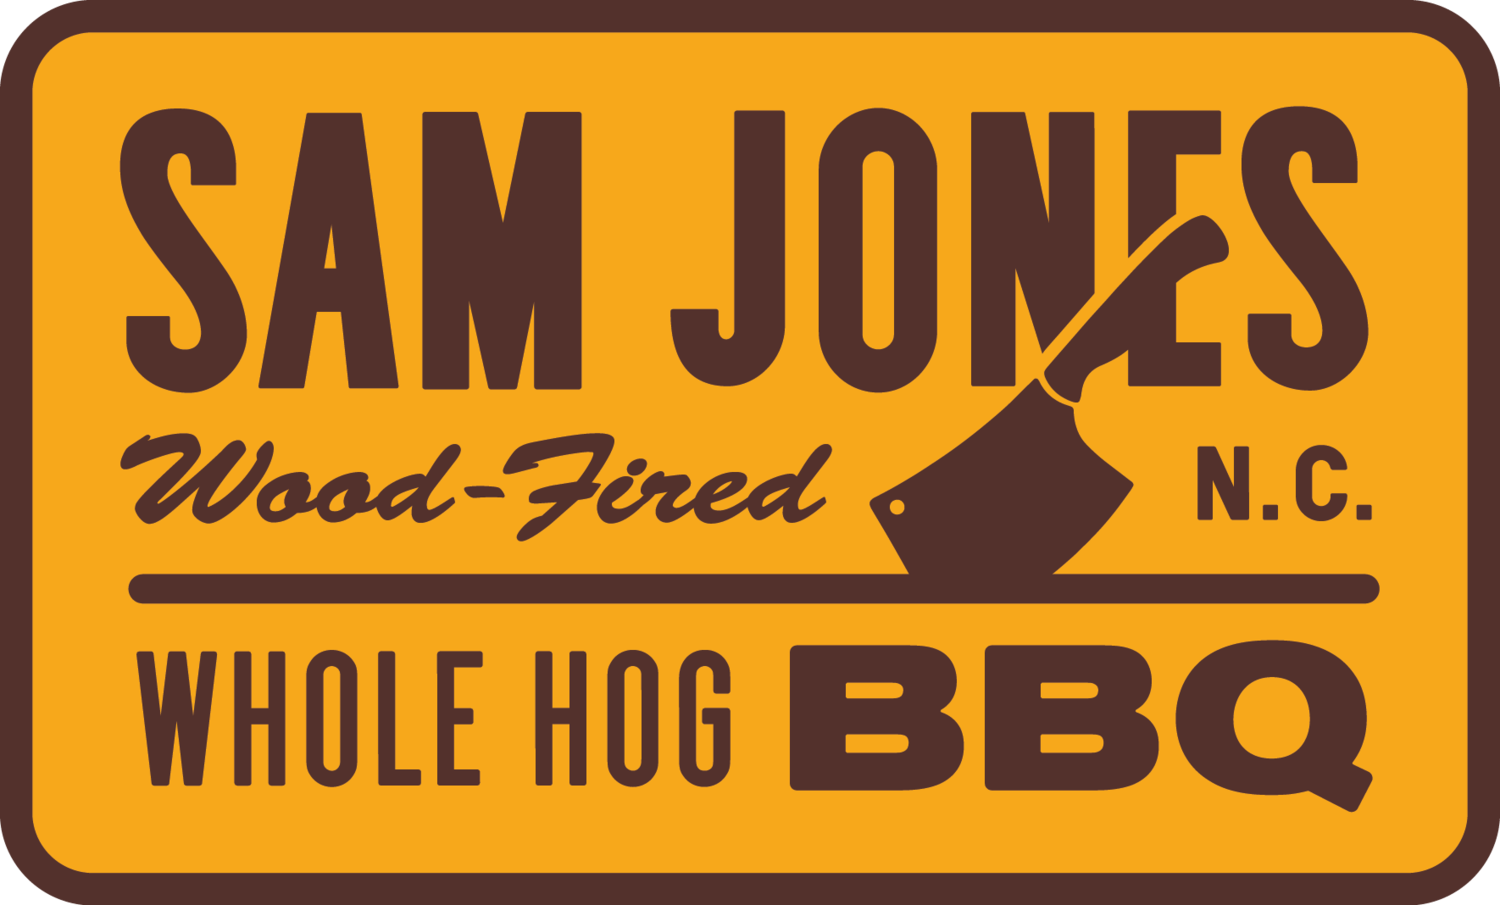 Sam Jones BBQ Restaurant